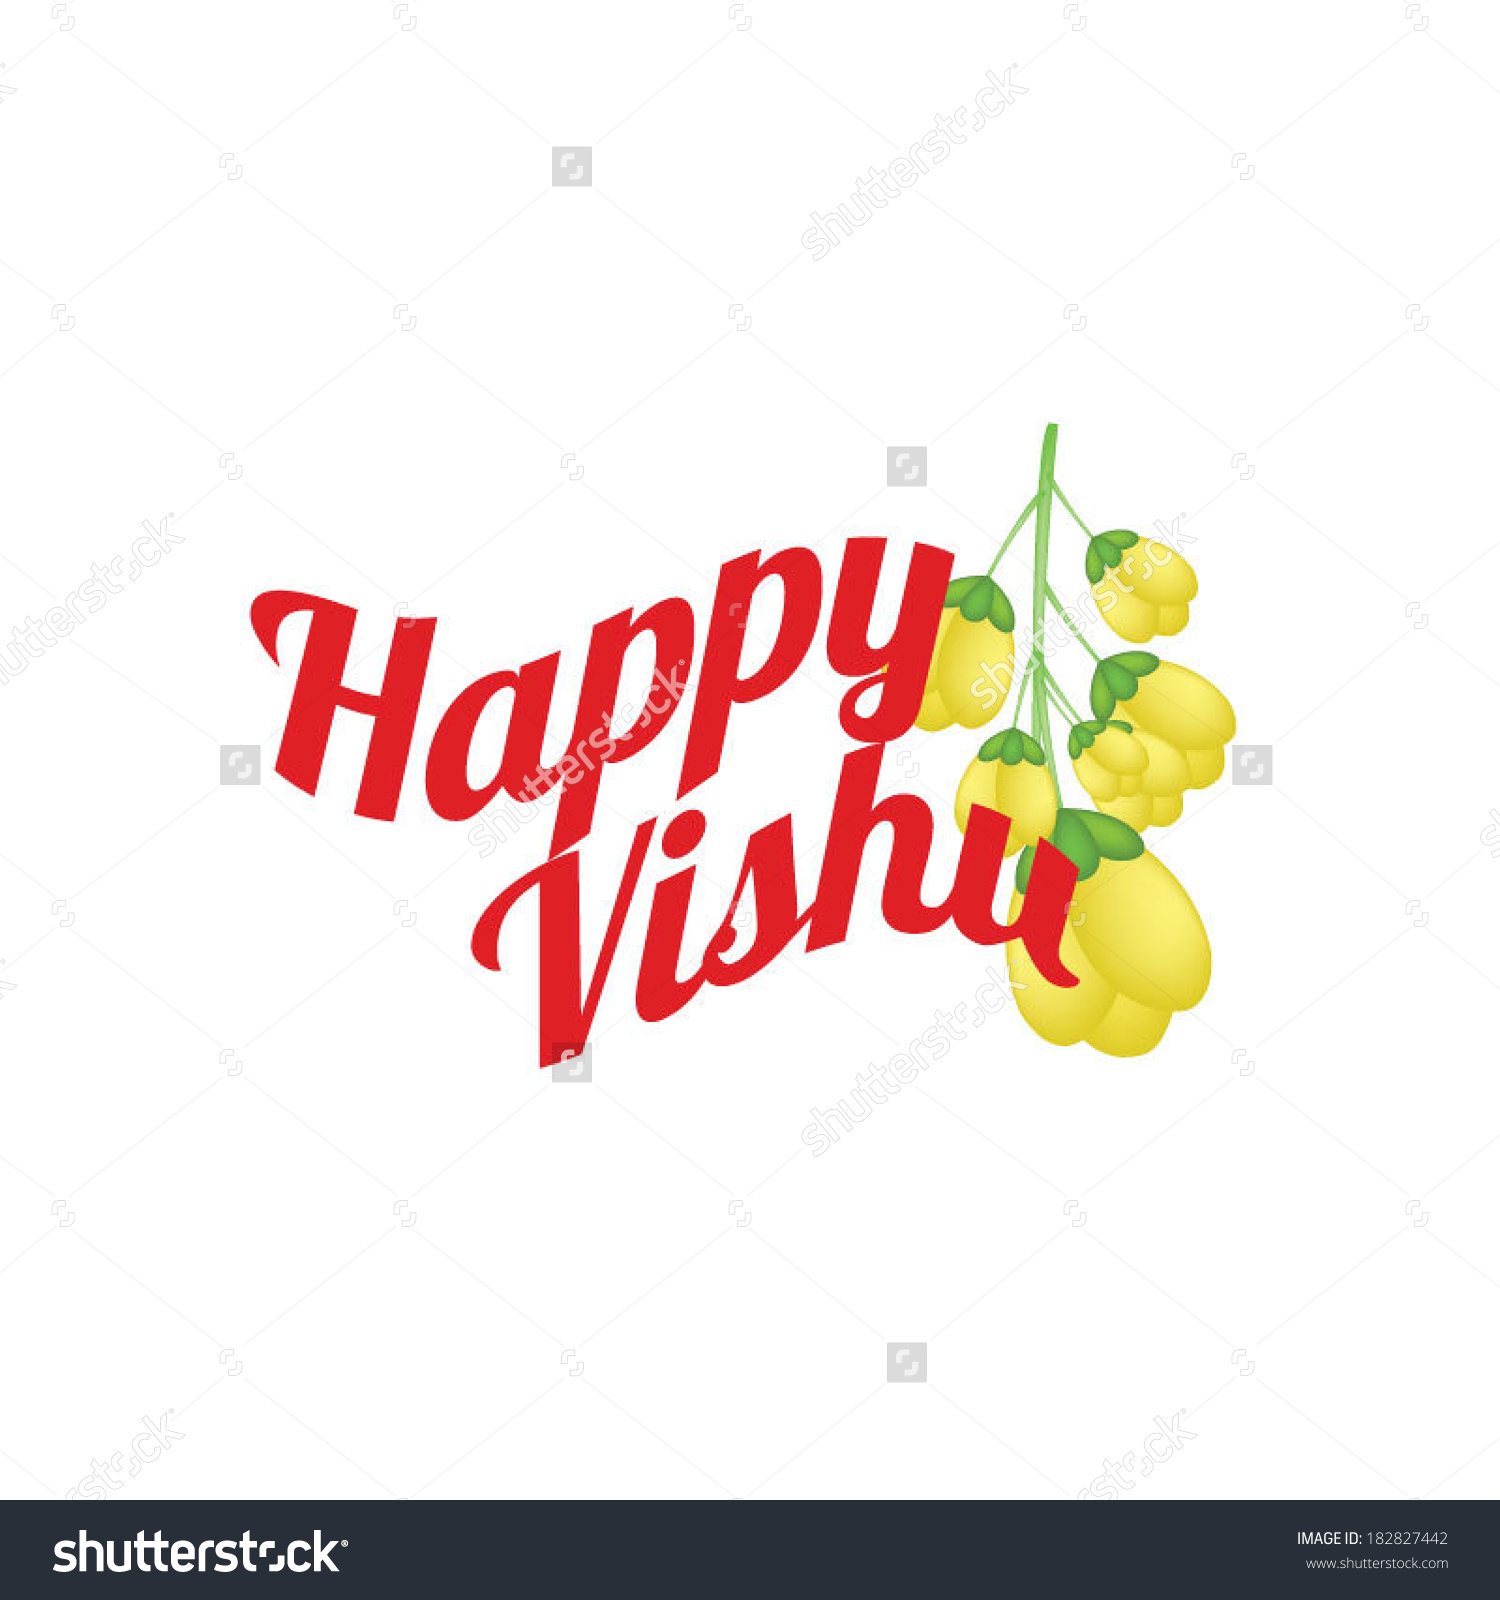 Happy Vishu Indian Festival Stock Vector 182827442.